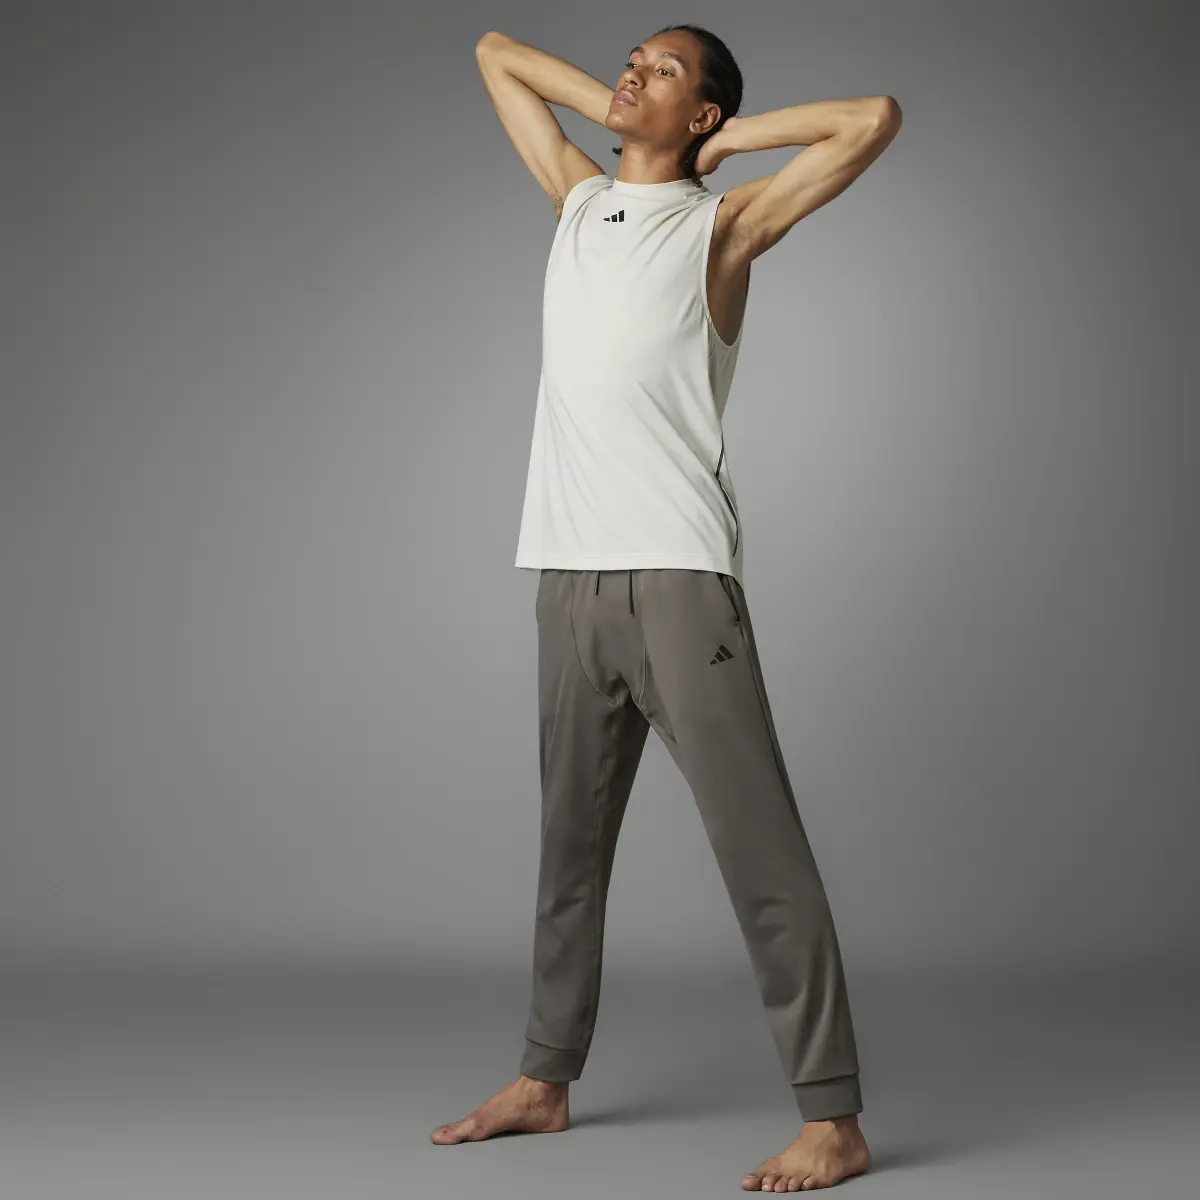 Adidas Authentic Balance Yoga Tank Top. 3